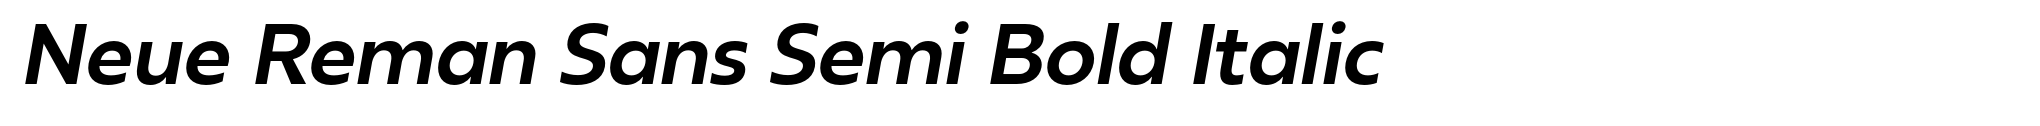 Neue Reman Sans Semi Bold Italic image